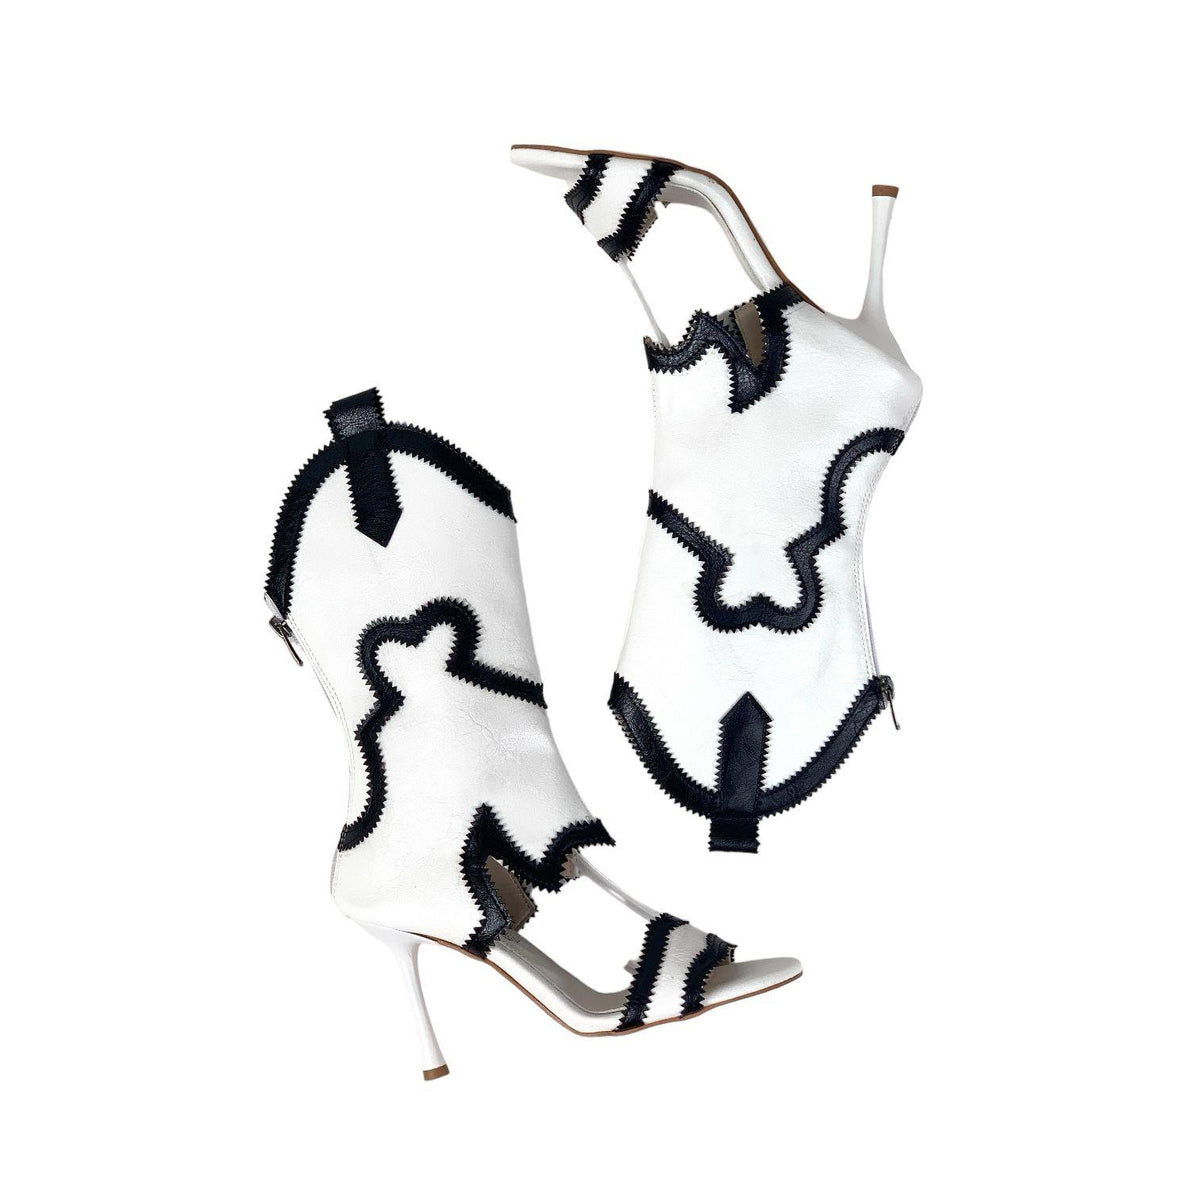 Women's Okla White Thin Heel Summer Cowboy Boots Shoes 10 cm - STREETMODE™